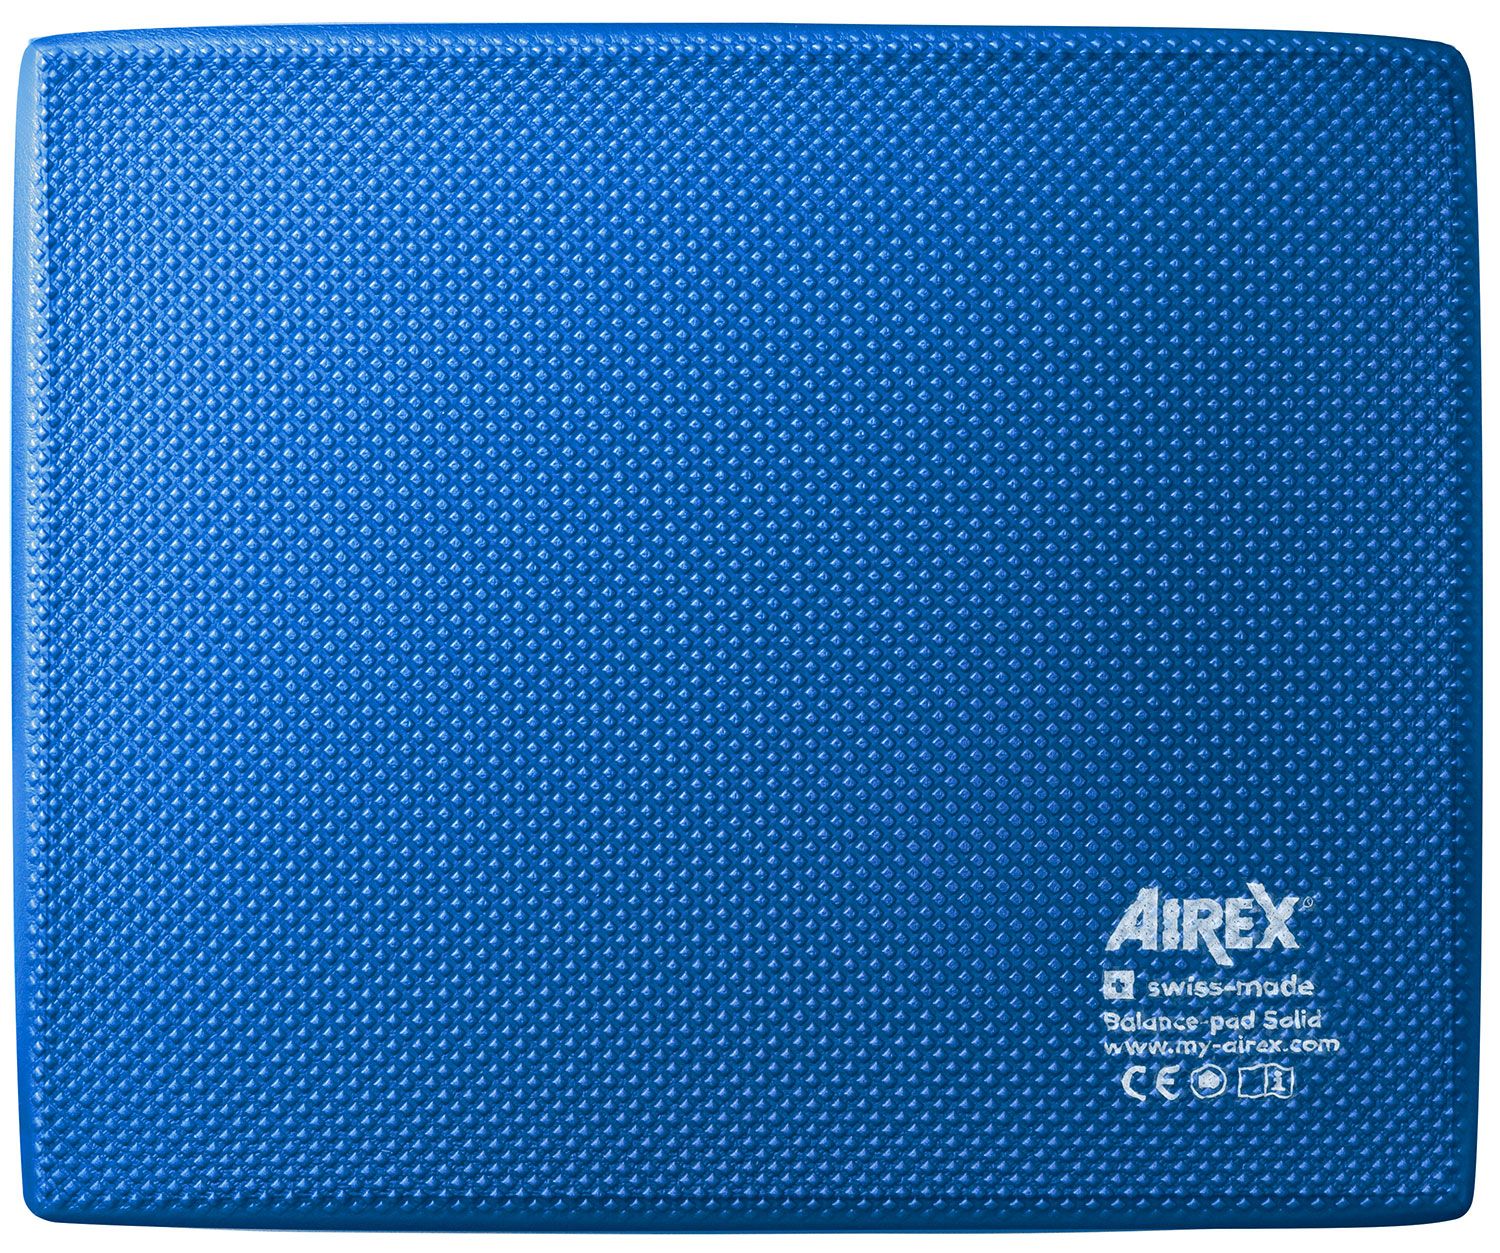 Airex Balance Pad Solid - 46 x 41 x 5 cm - bleu royal